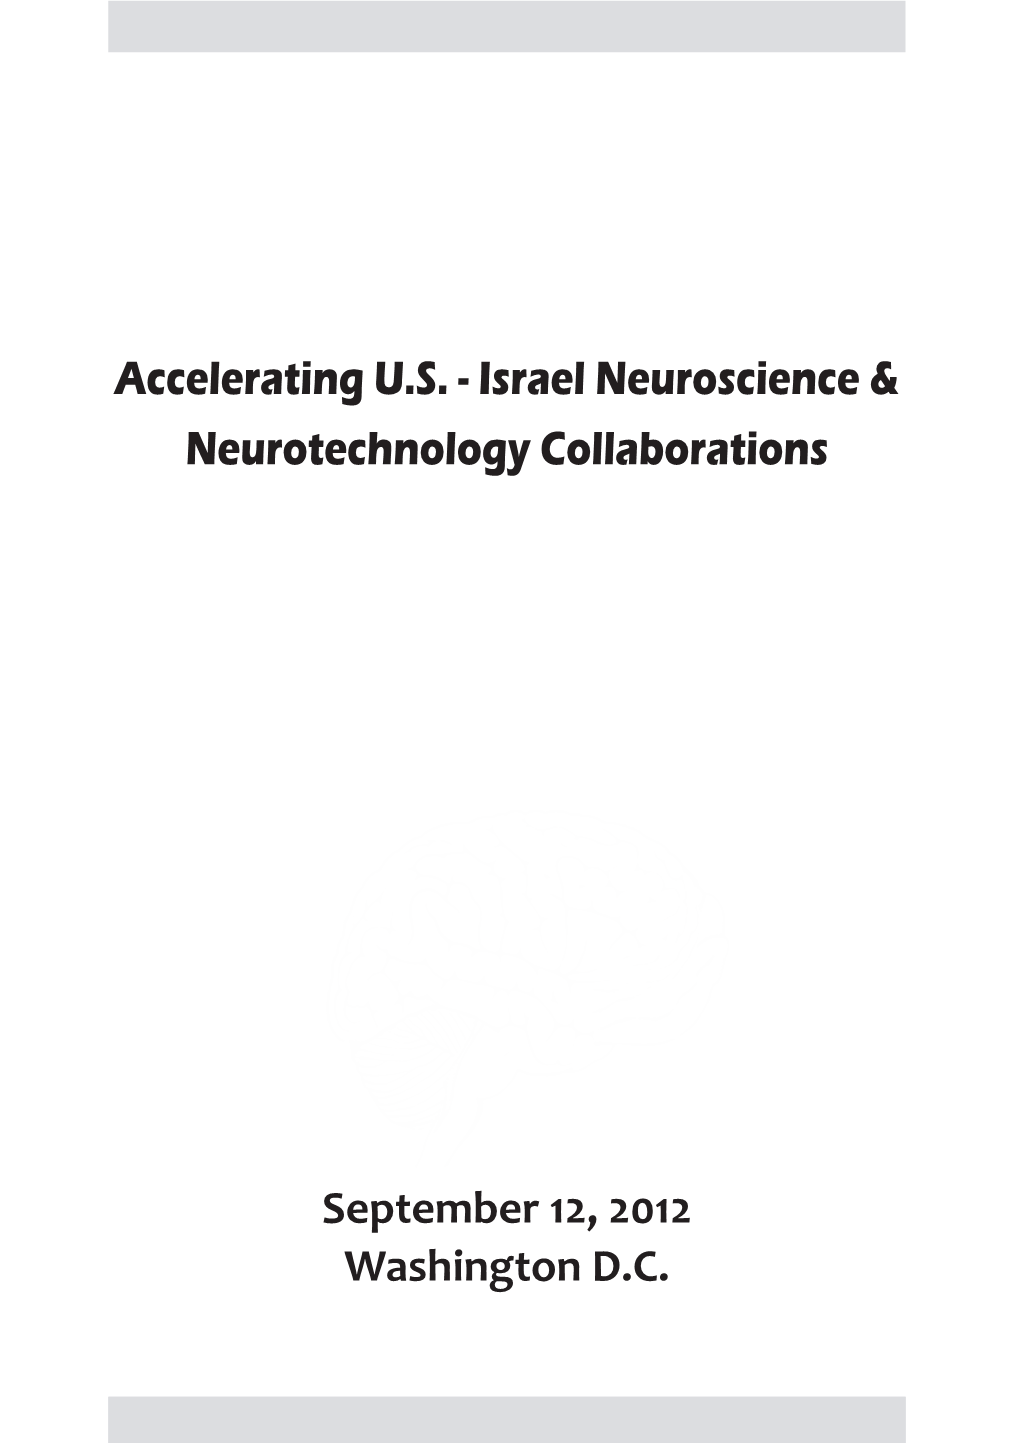 Israel Neuroscience & Neurotechnology Collaborations